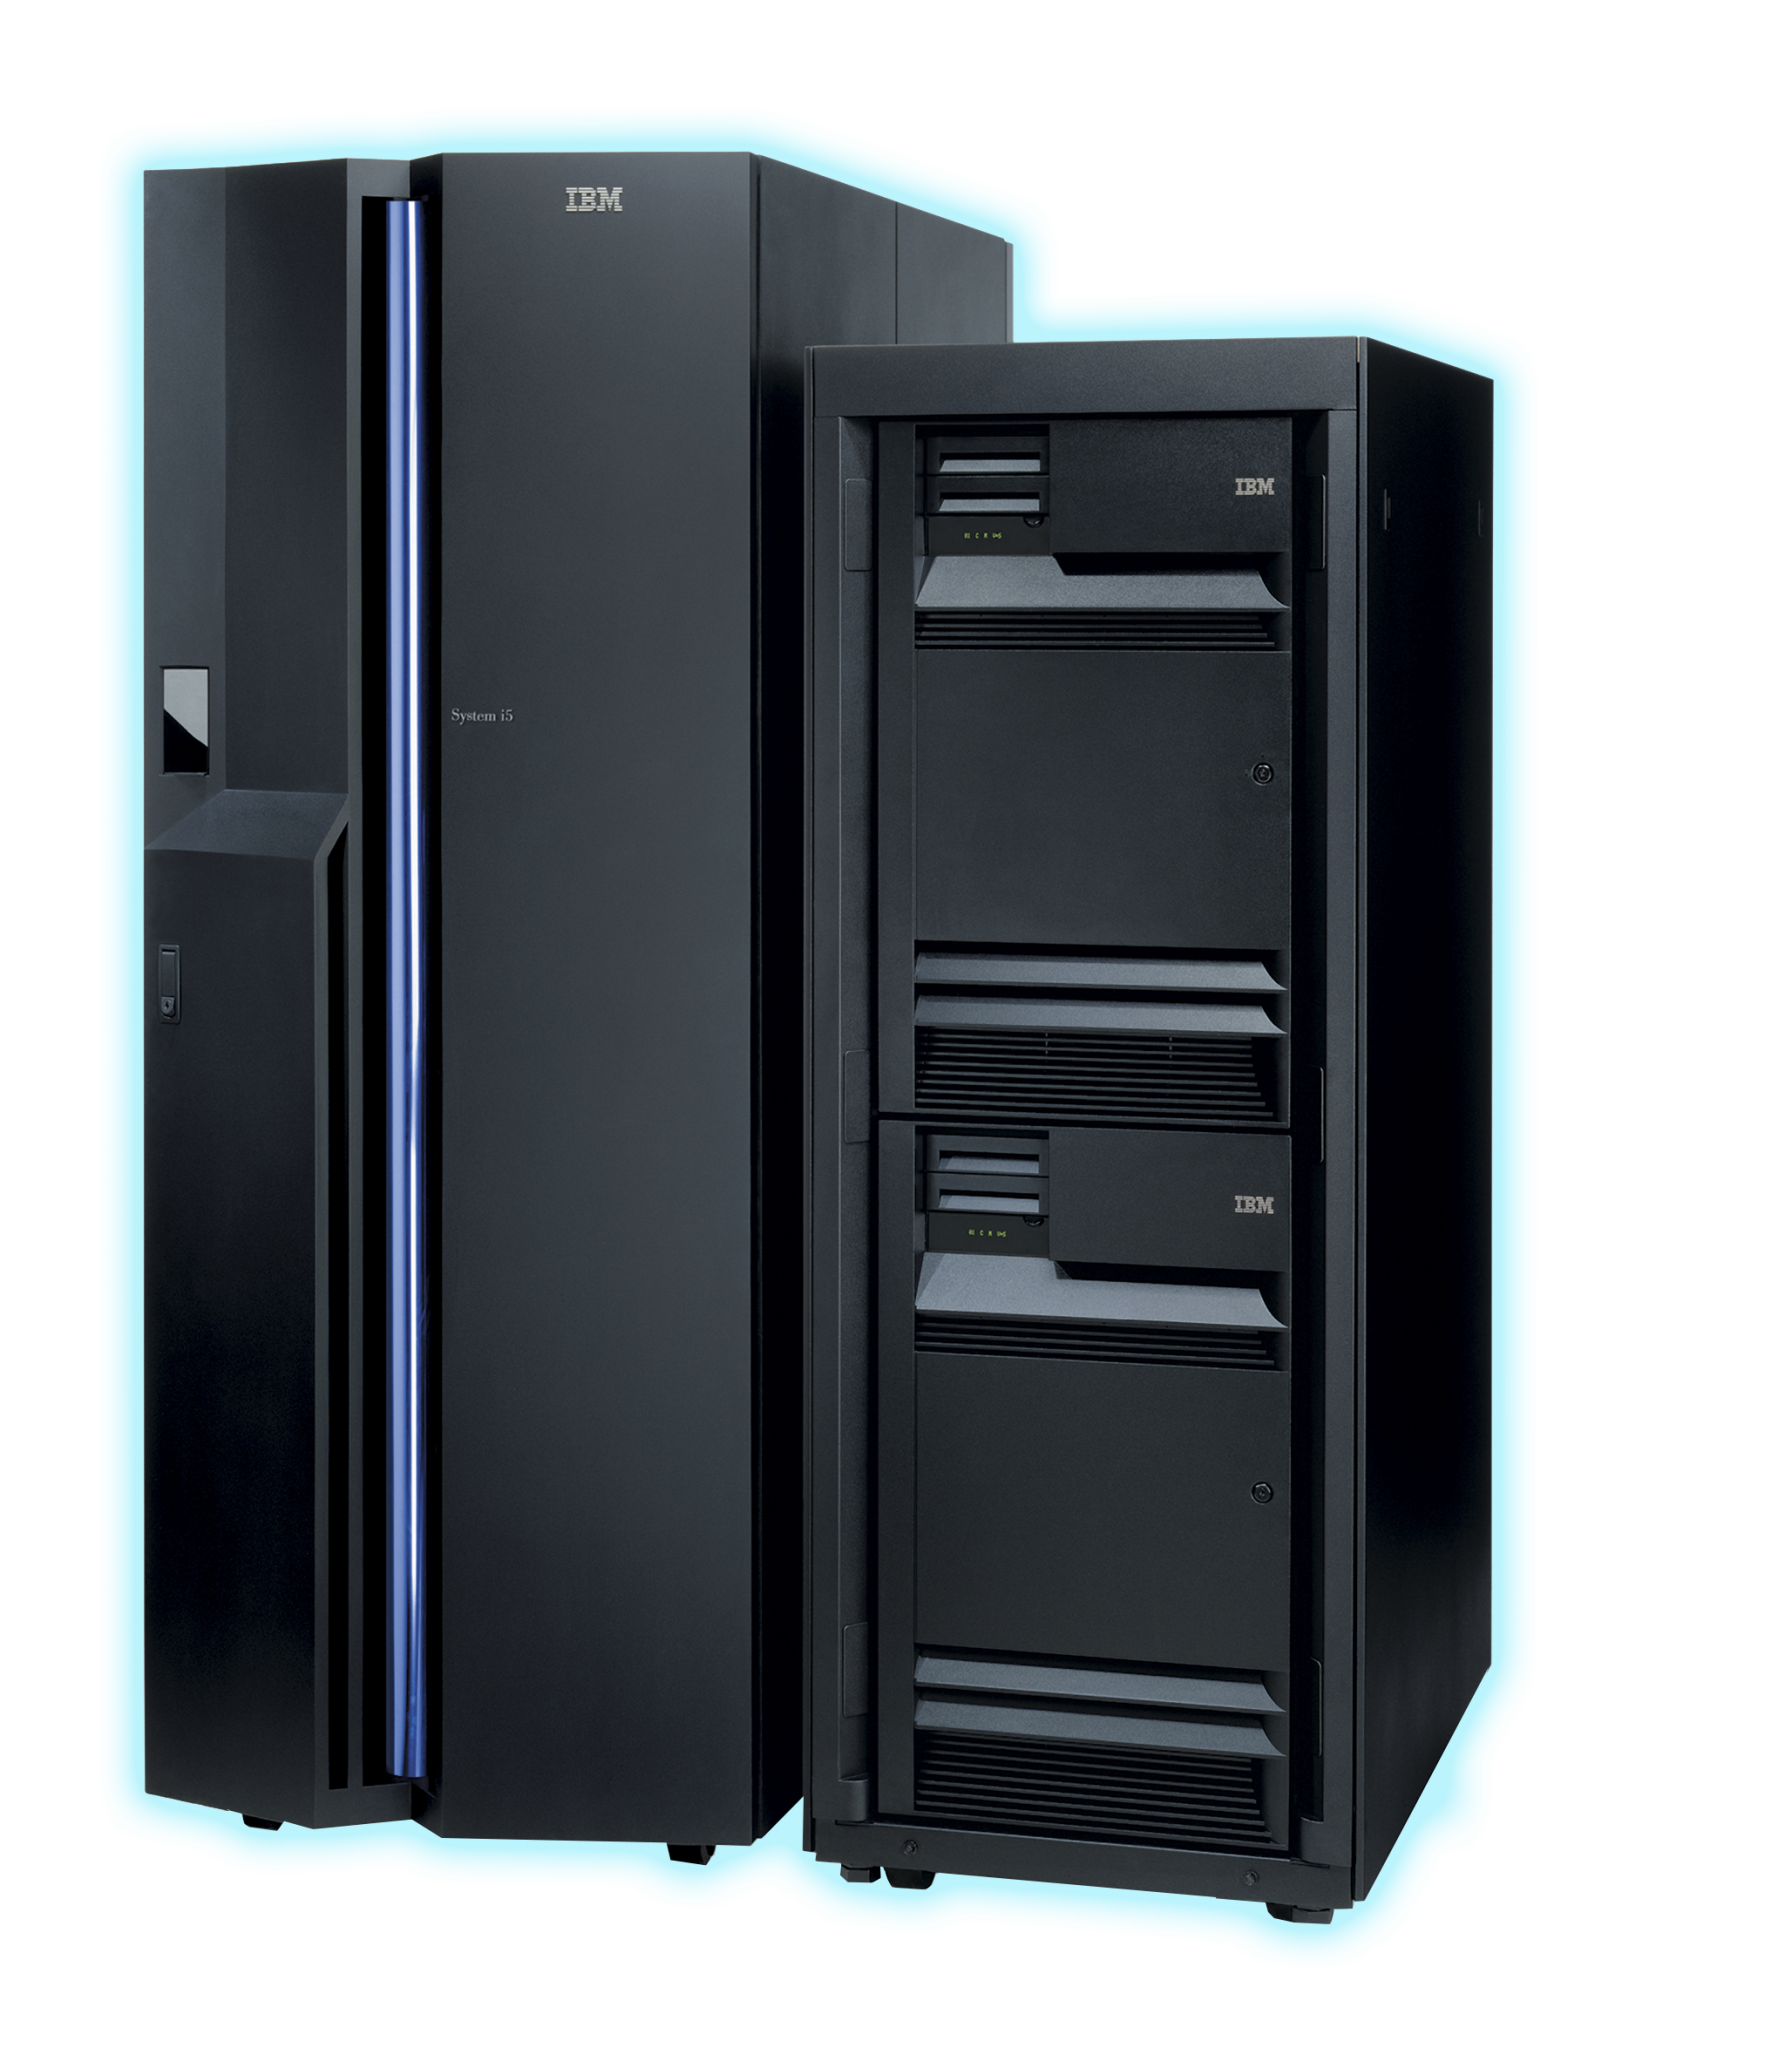 Ibm server. Серверное оборудование IBM. IBM as/400. Серверный комплекс IBM Power System i Series. Сервер IBM Power e950.